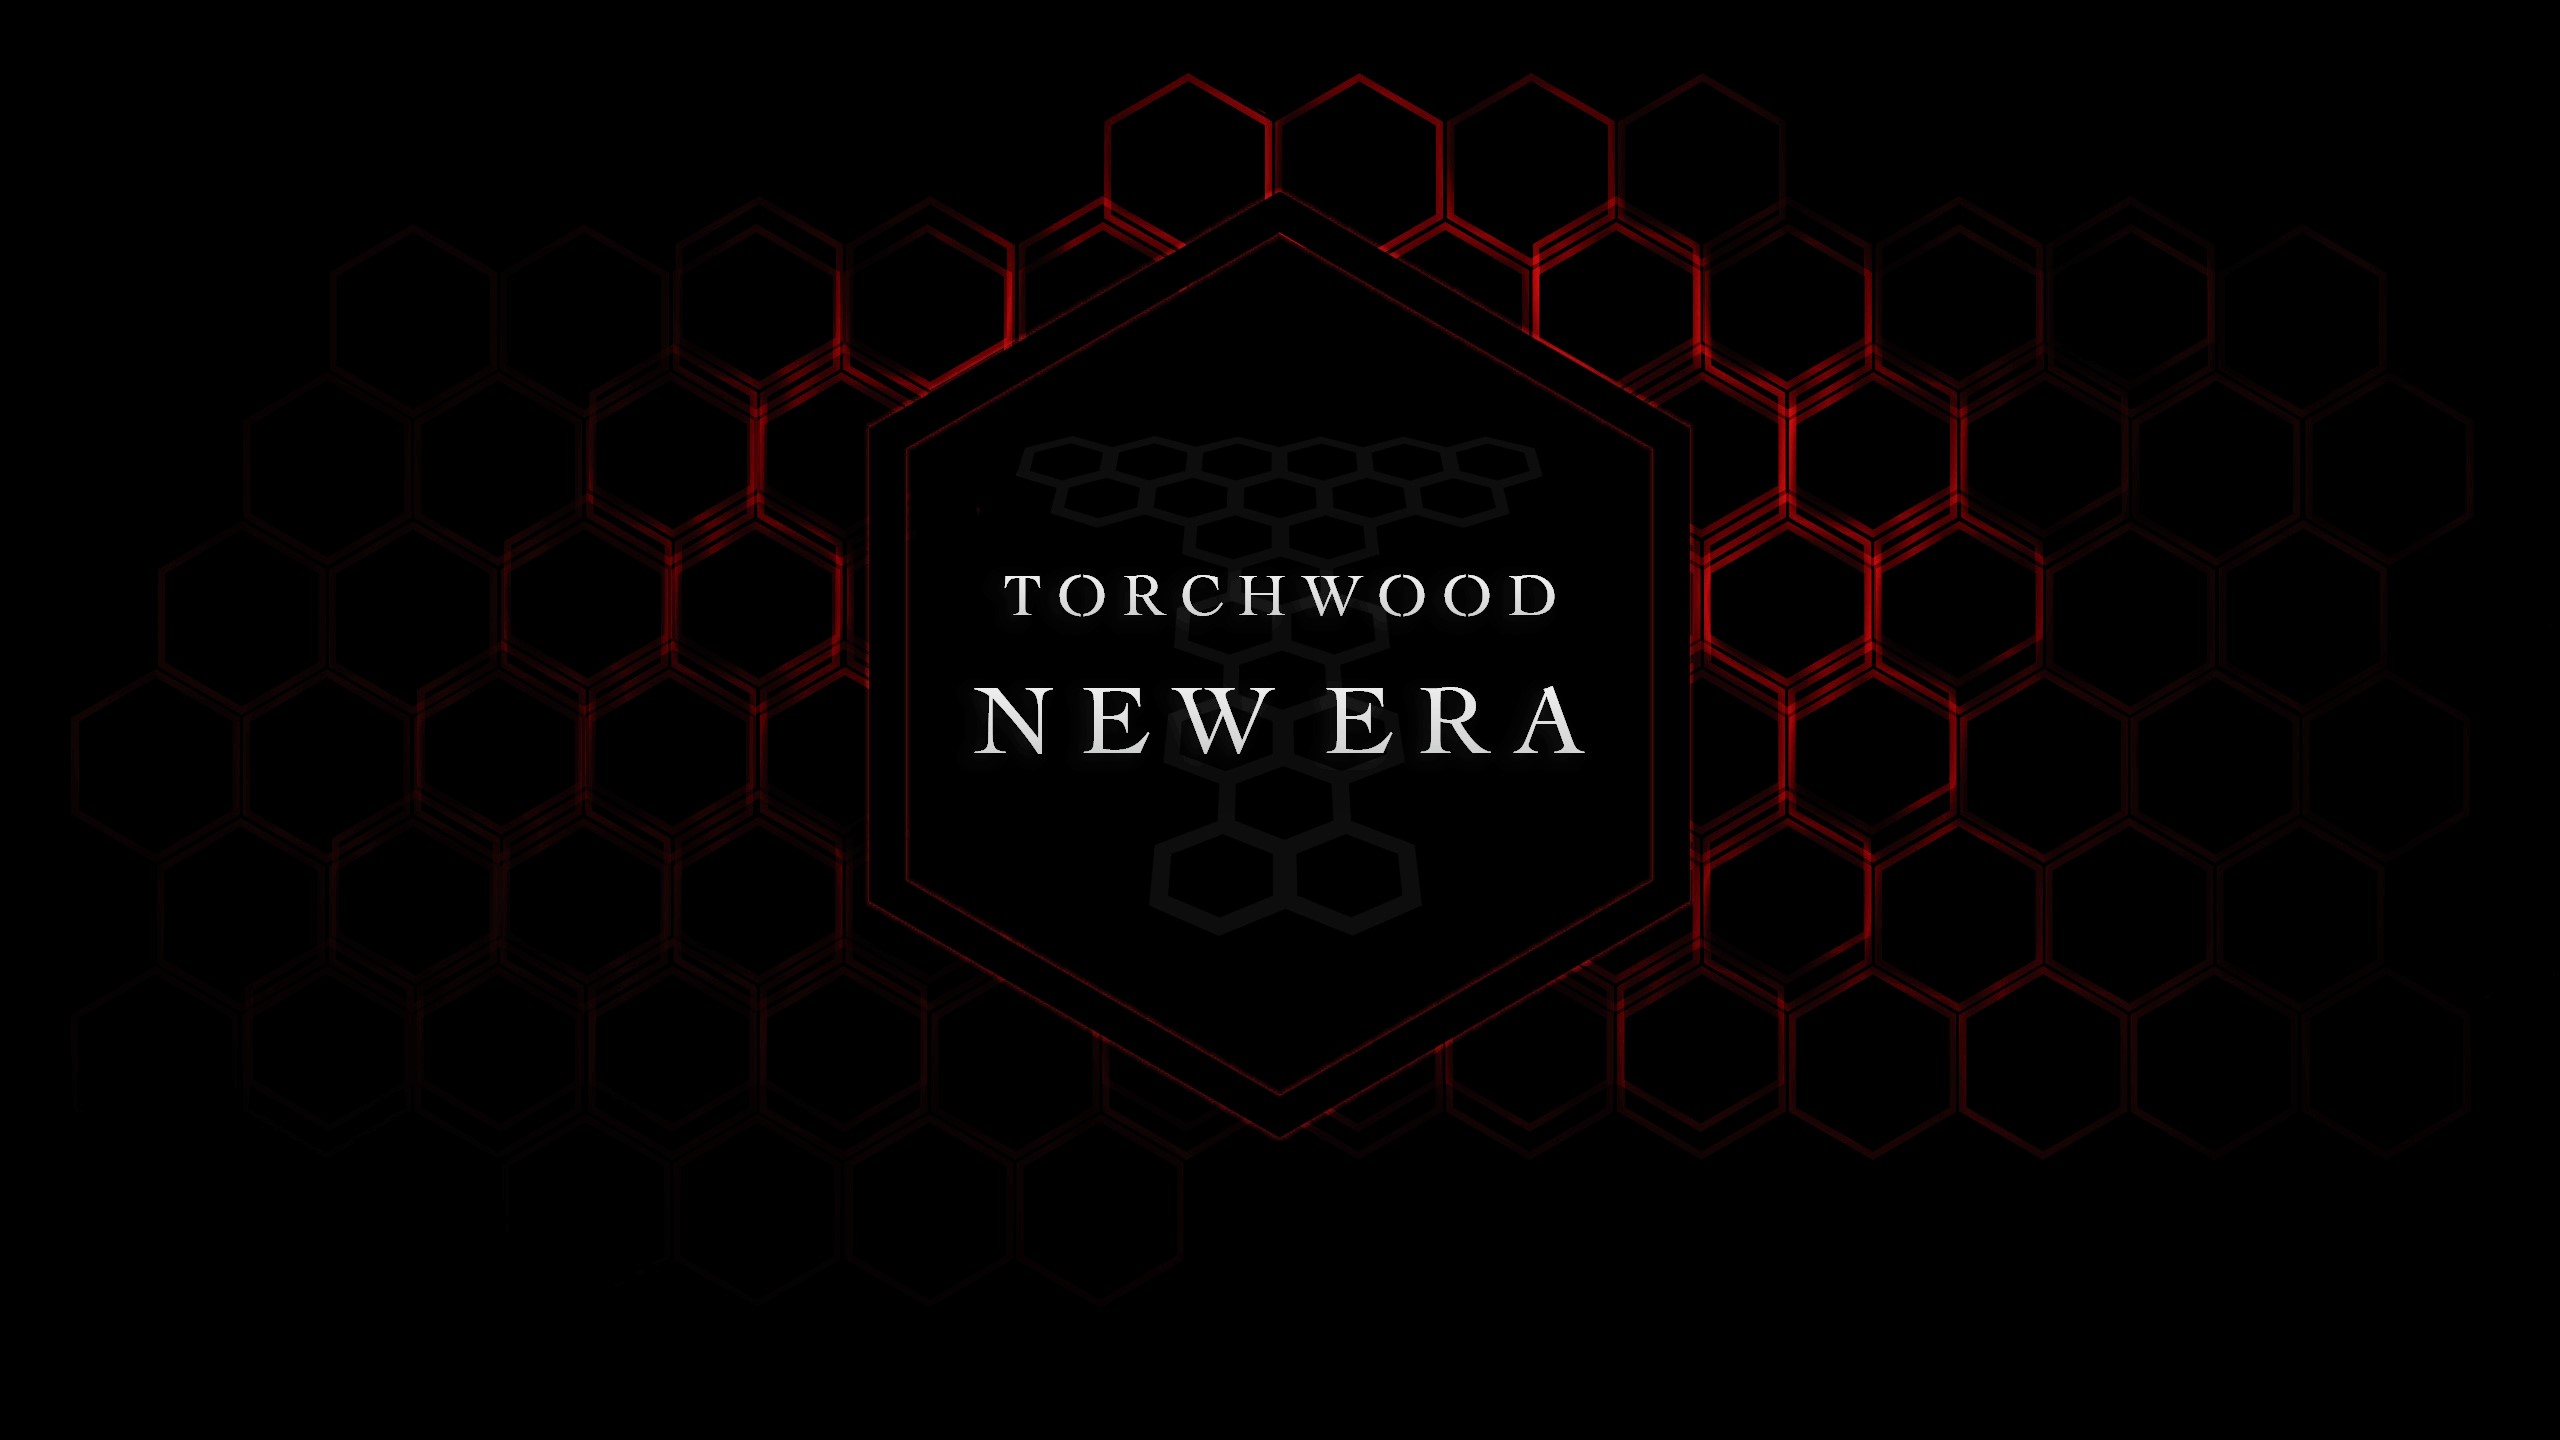 Torchwood New Era